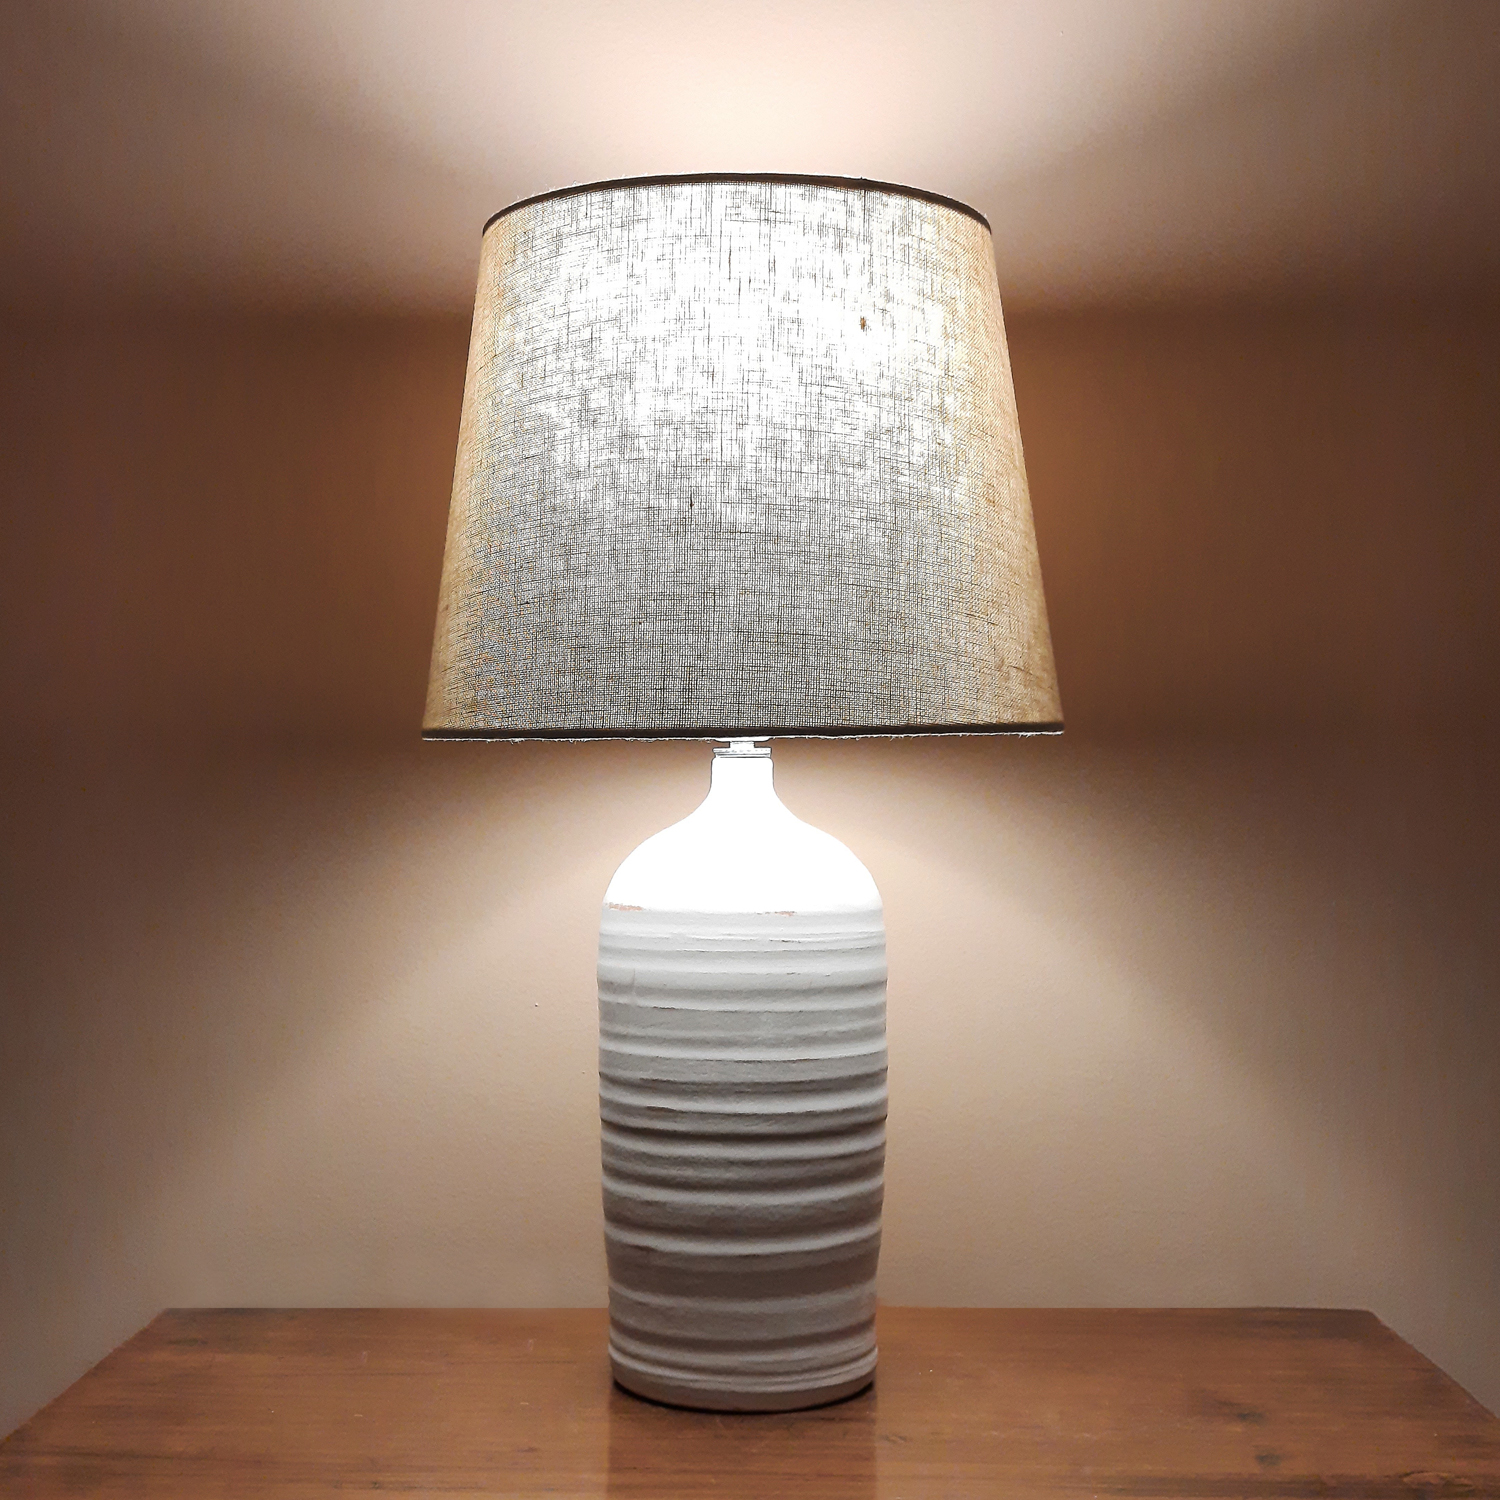 B-lamp verde – base per lampada – h 26 cm – DEVO